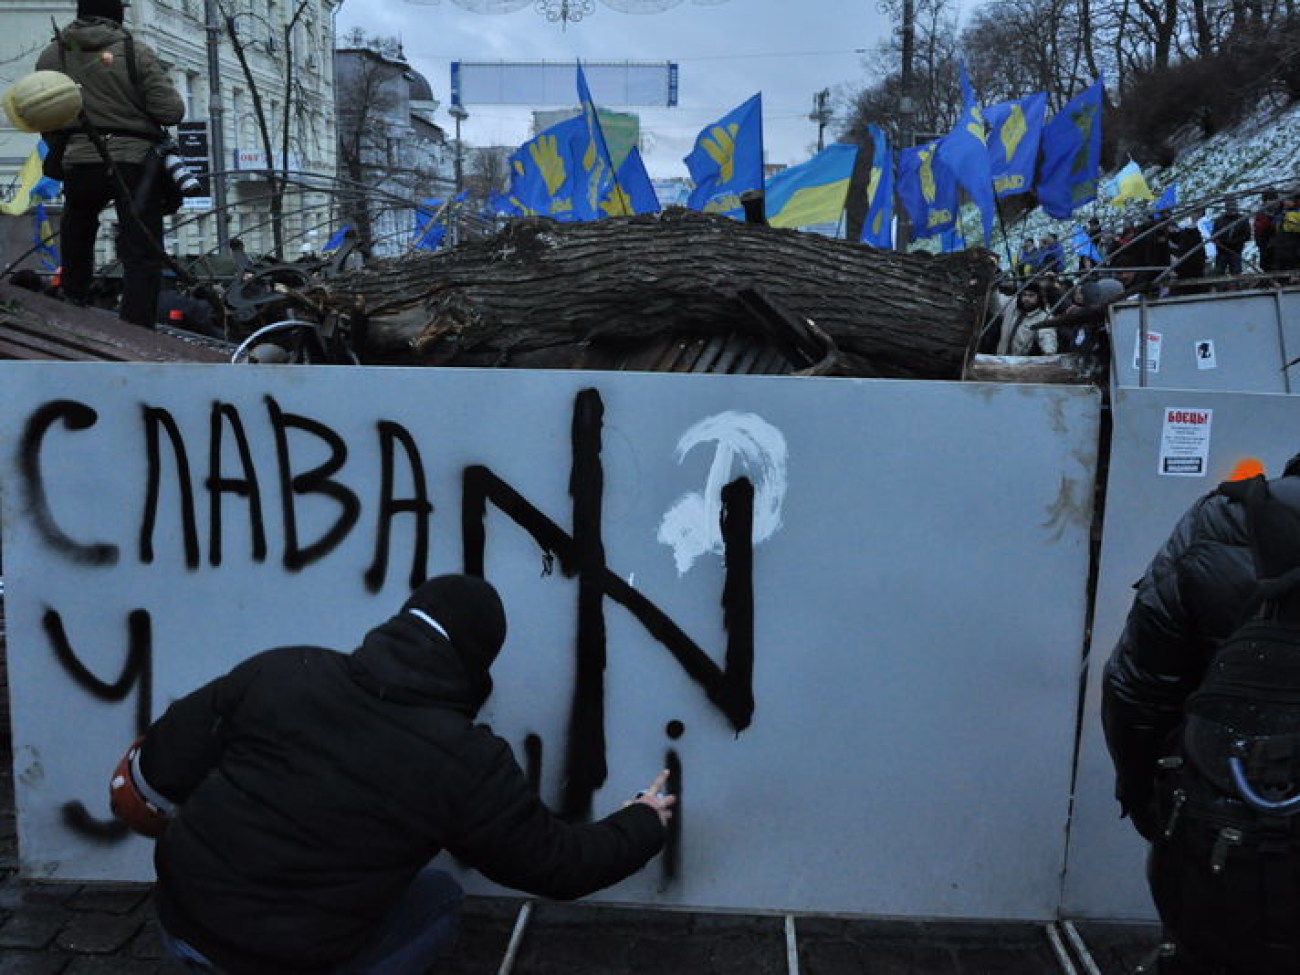 Евромайдановцы устанавливают палатки возле зданий власти, 8 декабря 2013г.